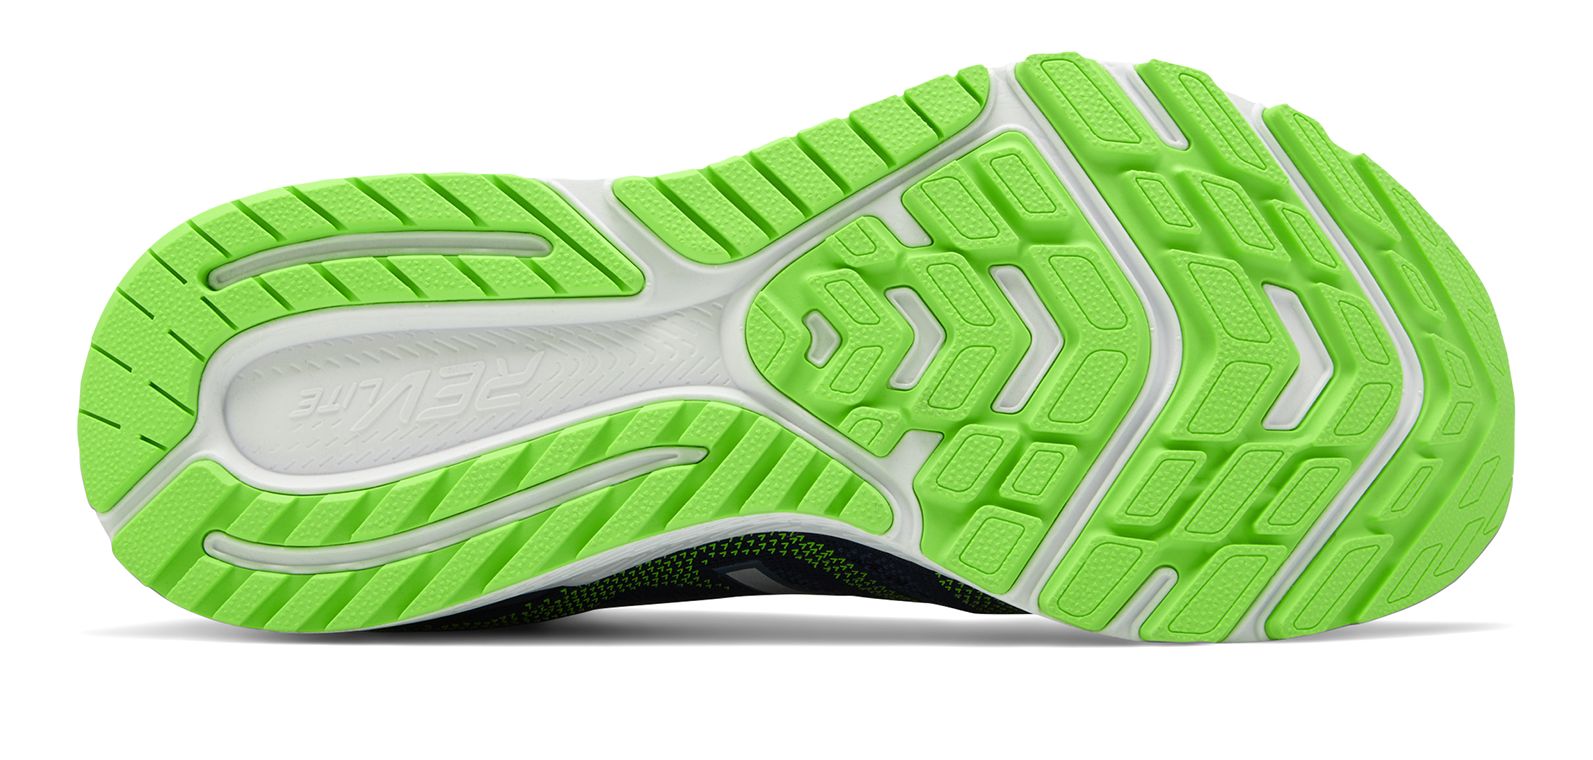 new balance fuelcore rush v3 men's running shoes